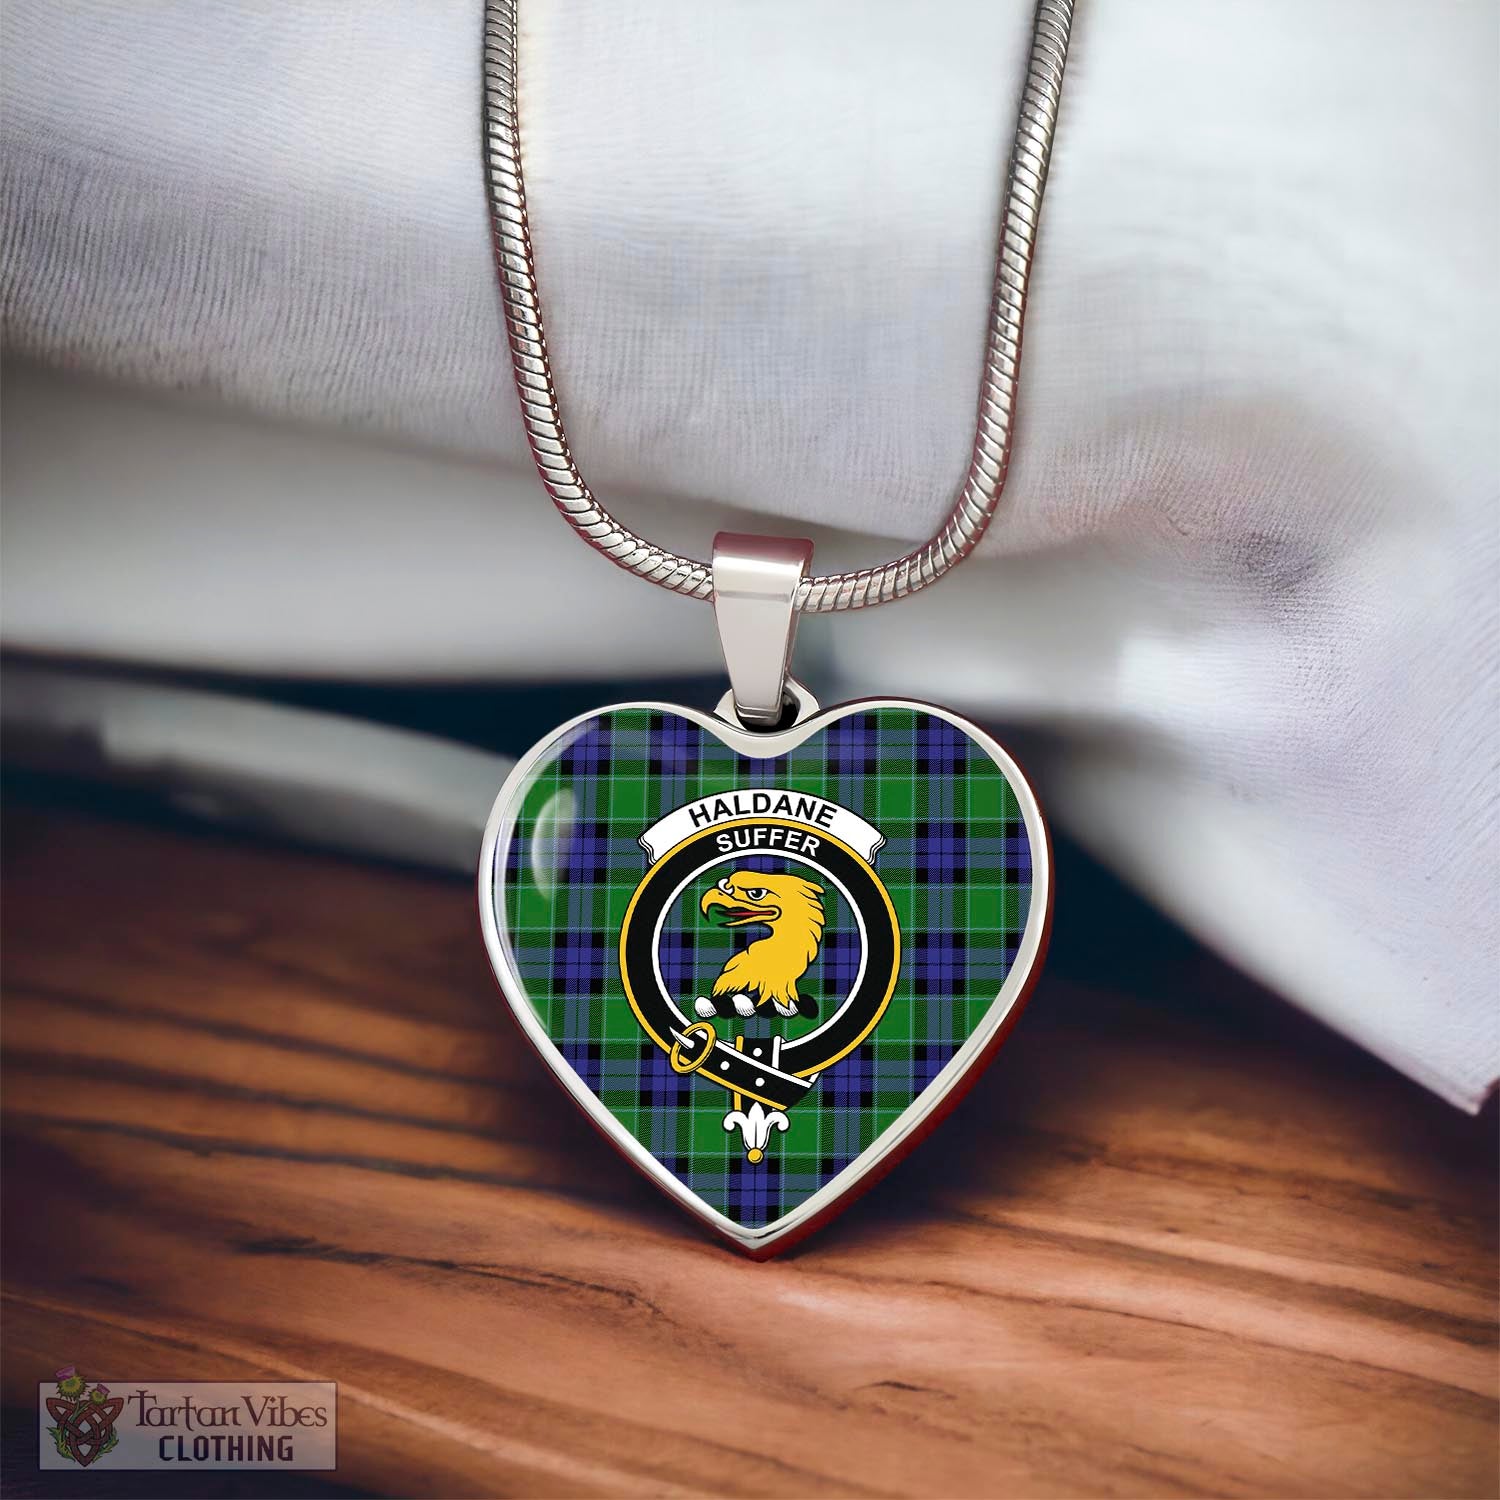 Tartan Vibes Clothing Haldane Tartan Heart Necklace with Family Crest